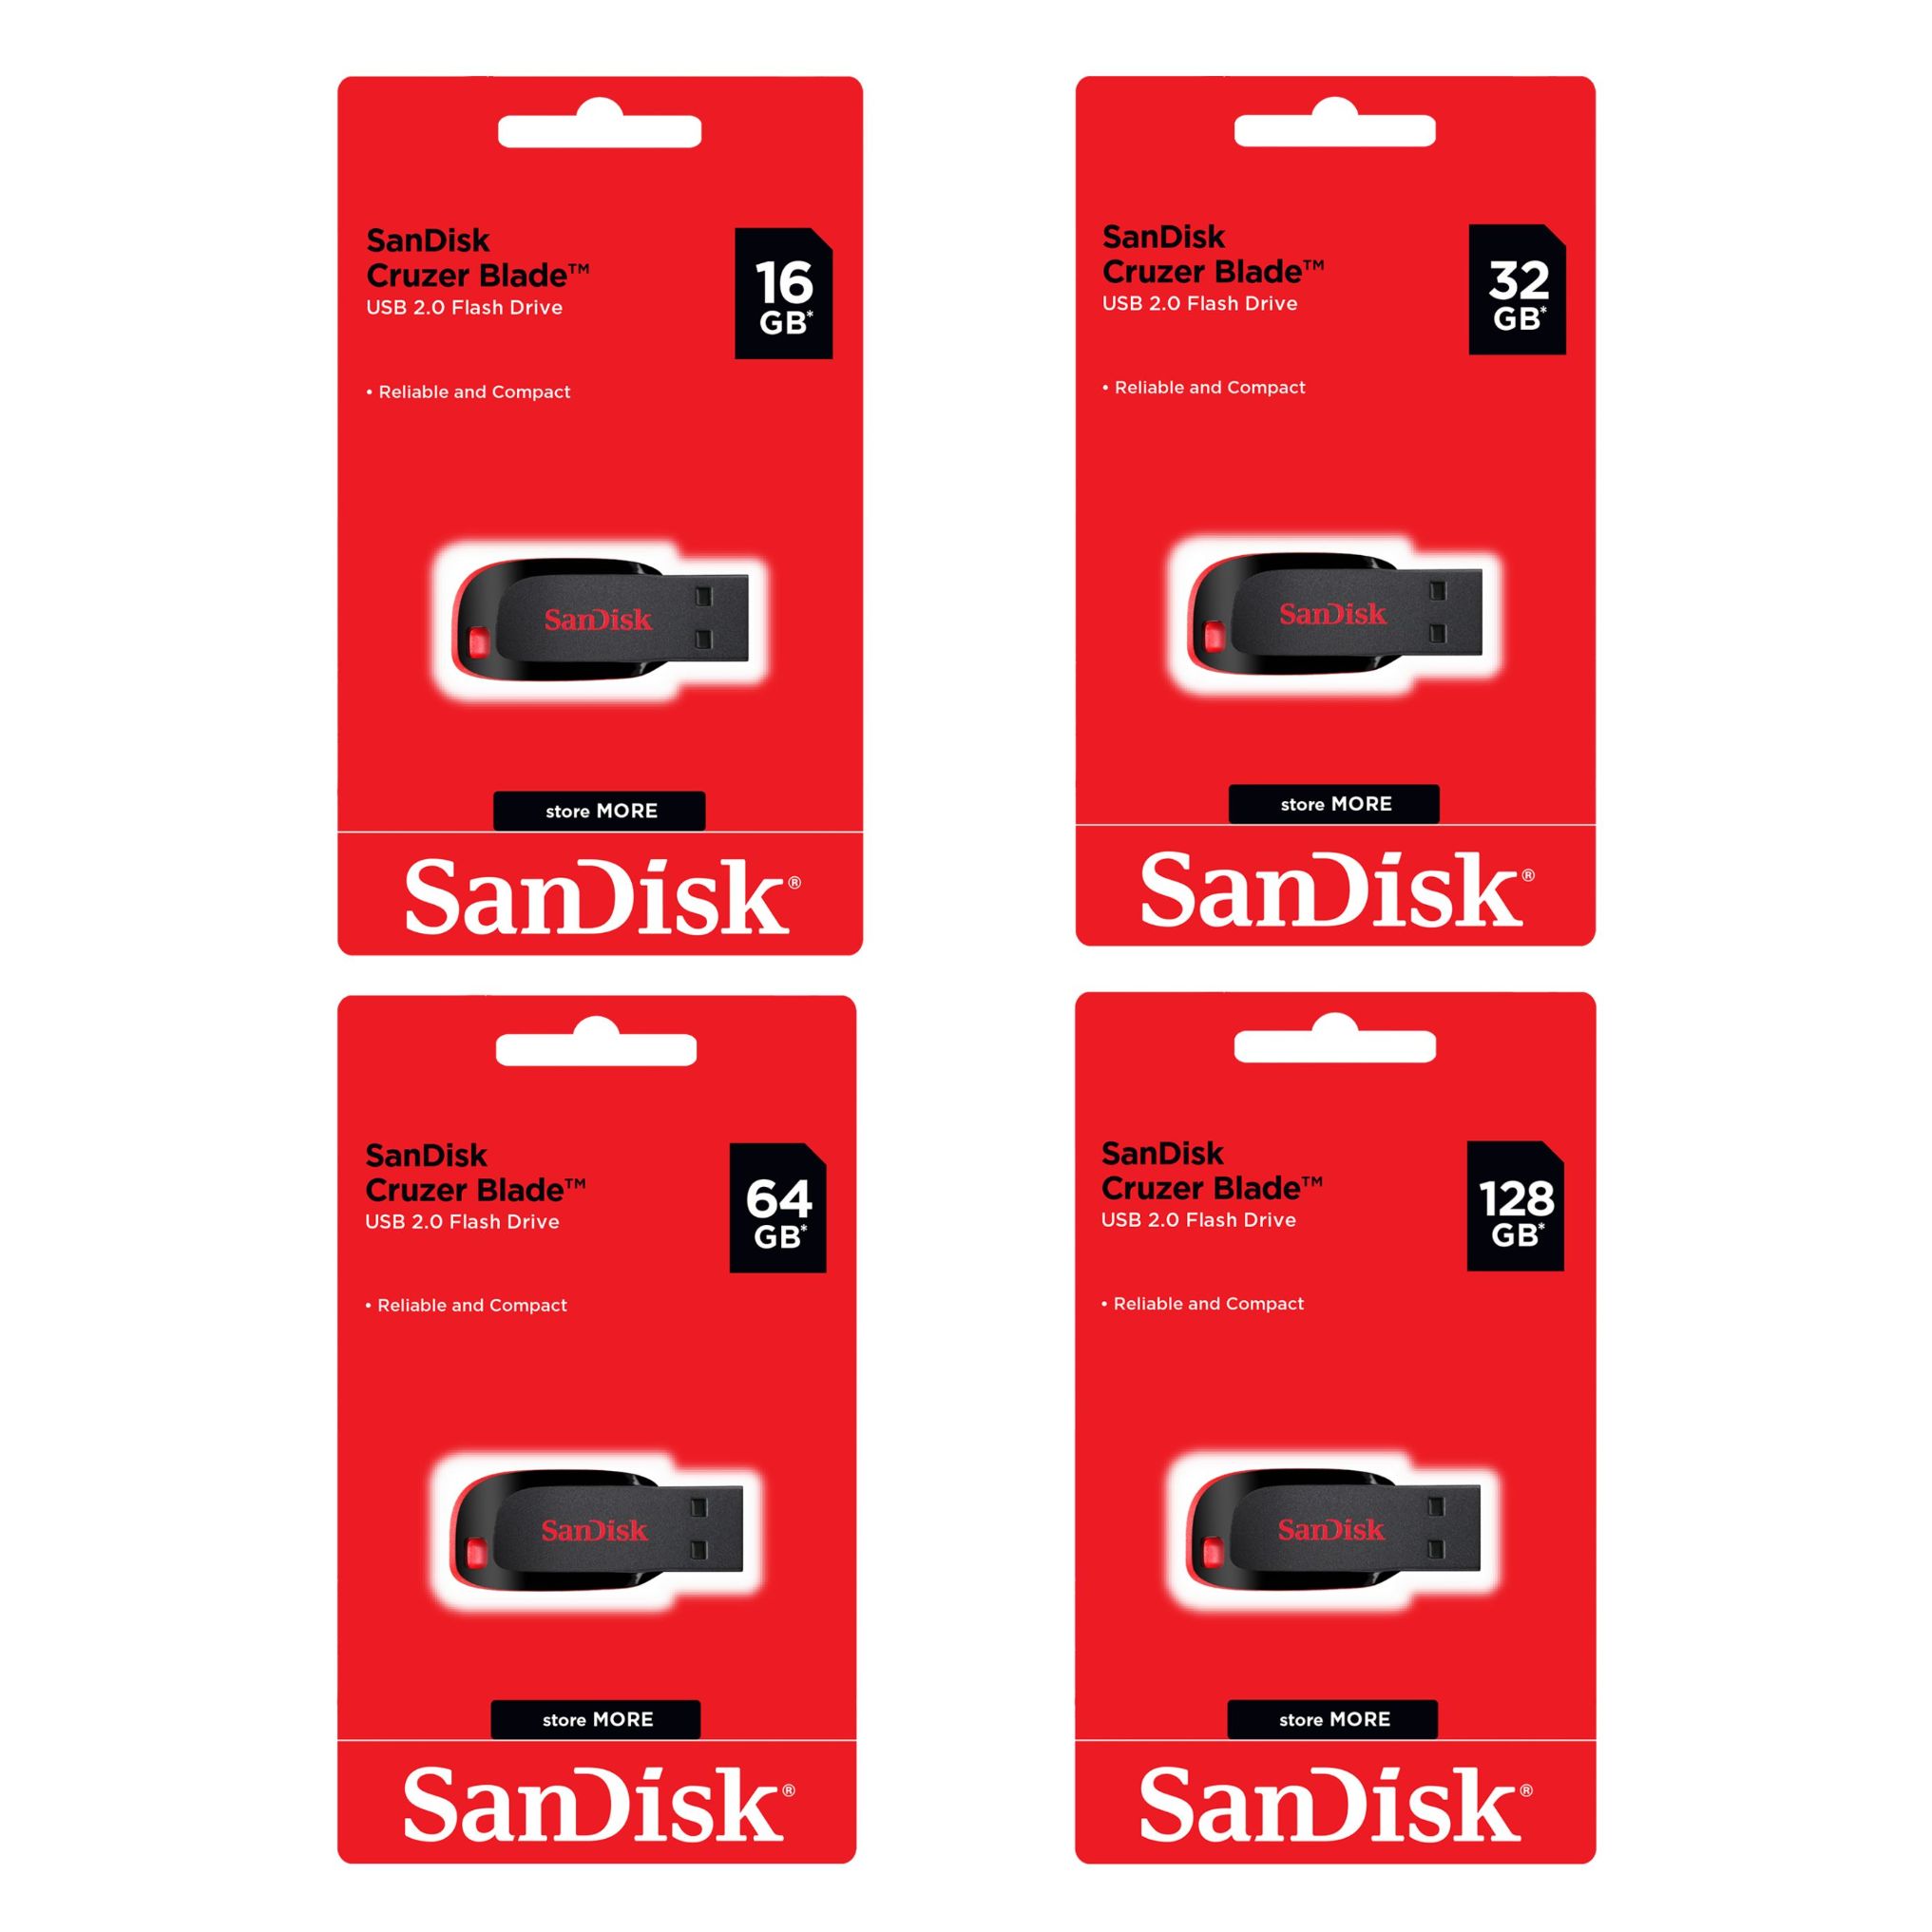 SanDisk Cruzer Blade USB 2.0 Flash Drive | Portable Data Storage Device